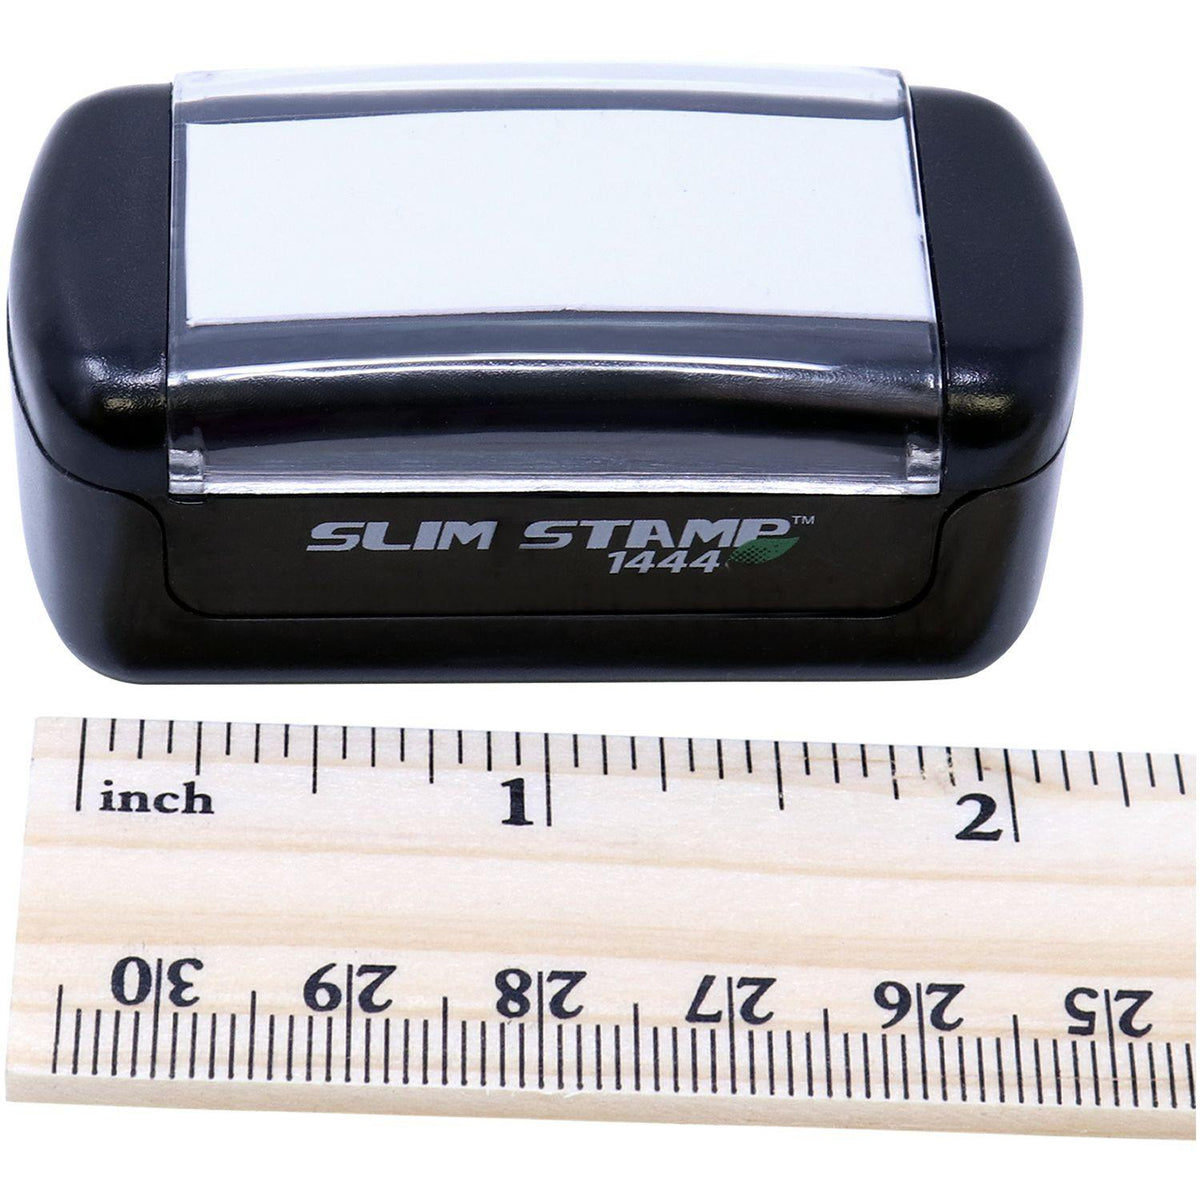 Measurement Slim Pre-Inked Expres Entrega Inmedia Stamp with Ruler